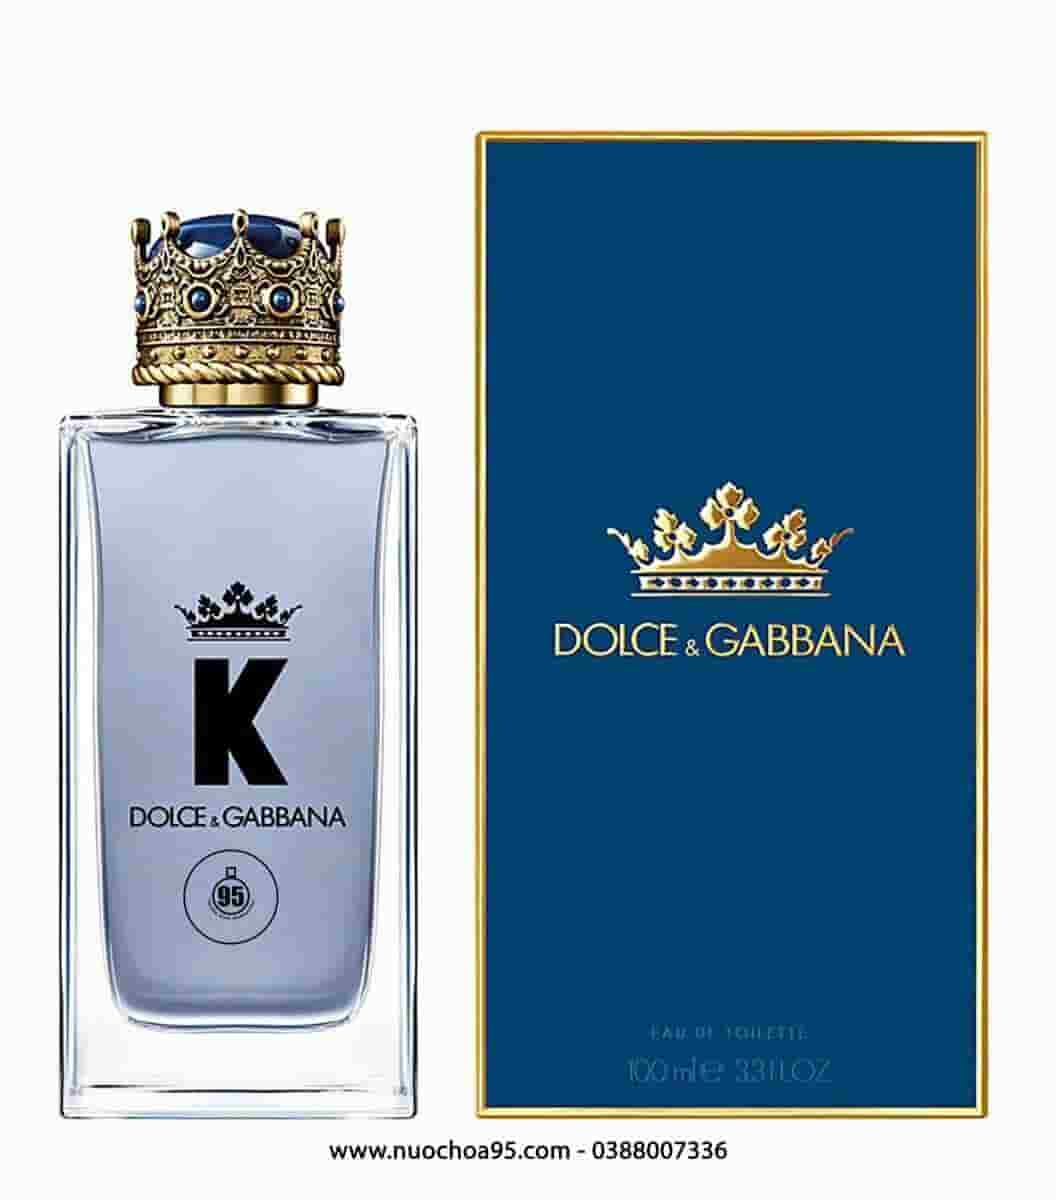 Nước hoa Dolce & Gabbana K Eau De Toilette